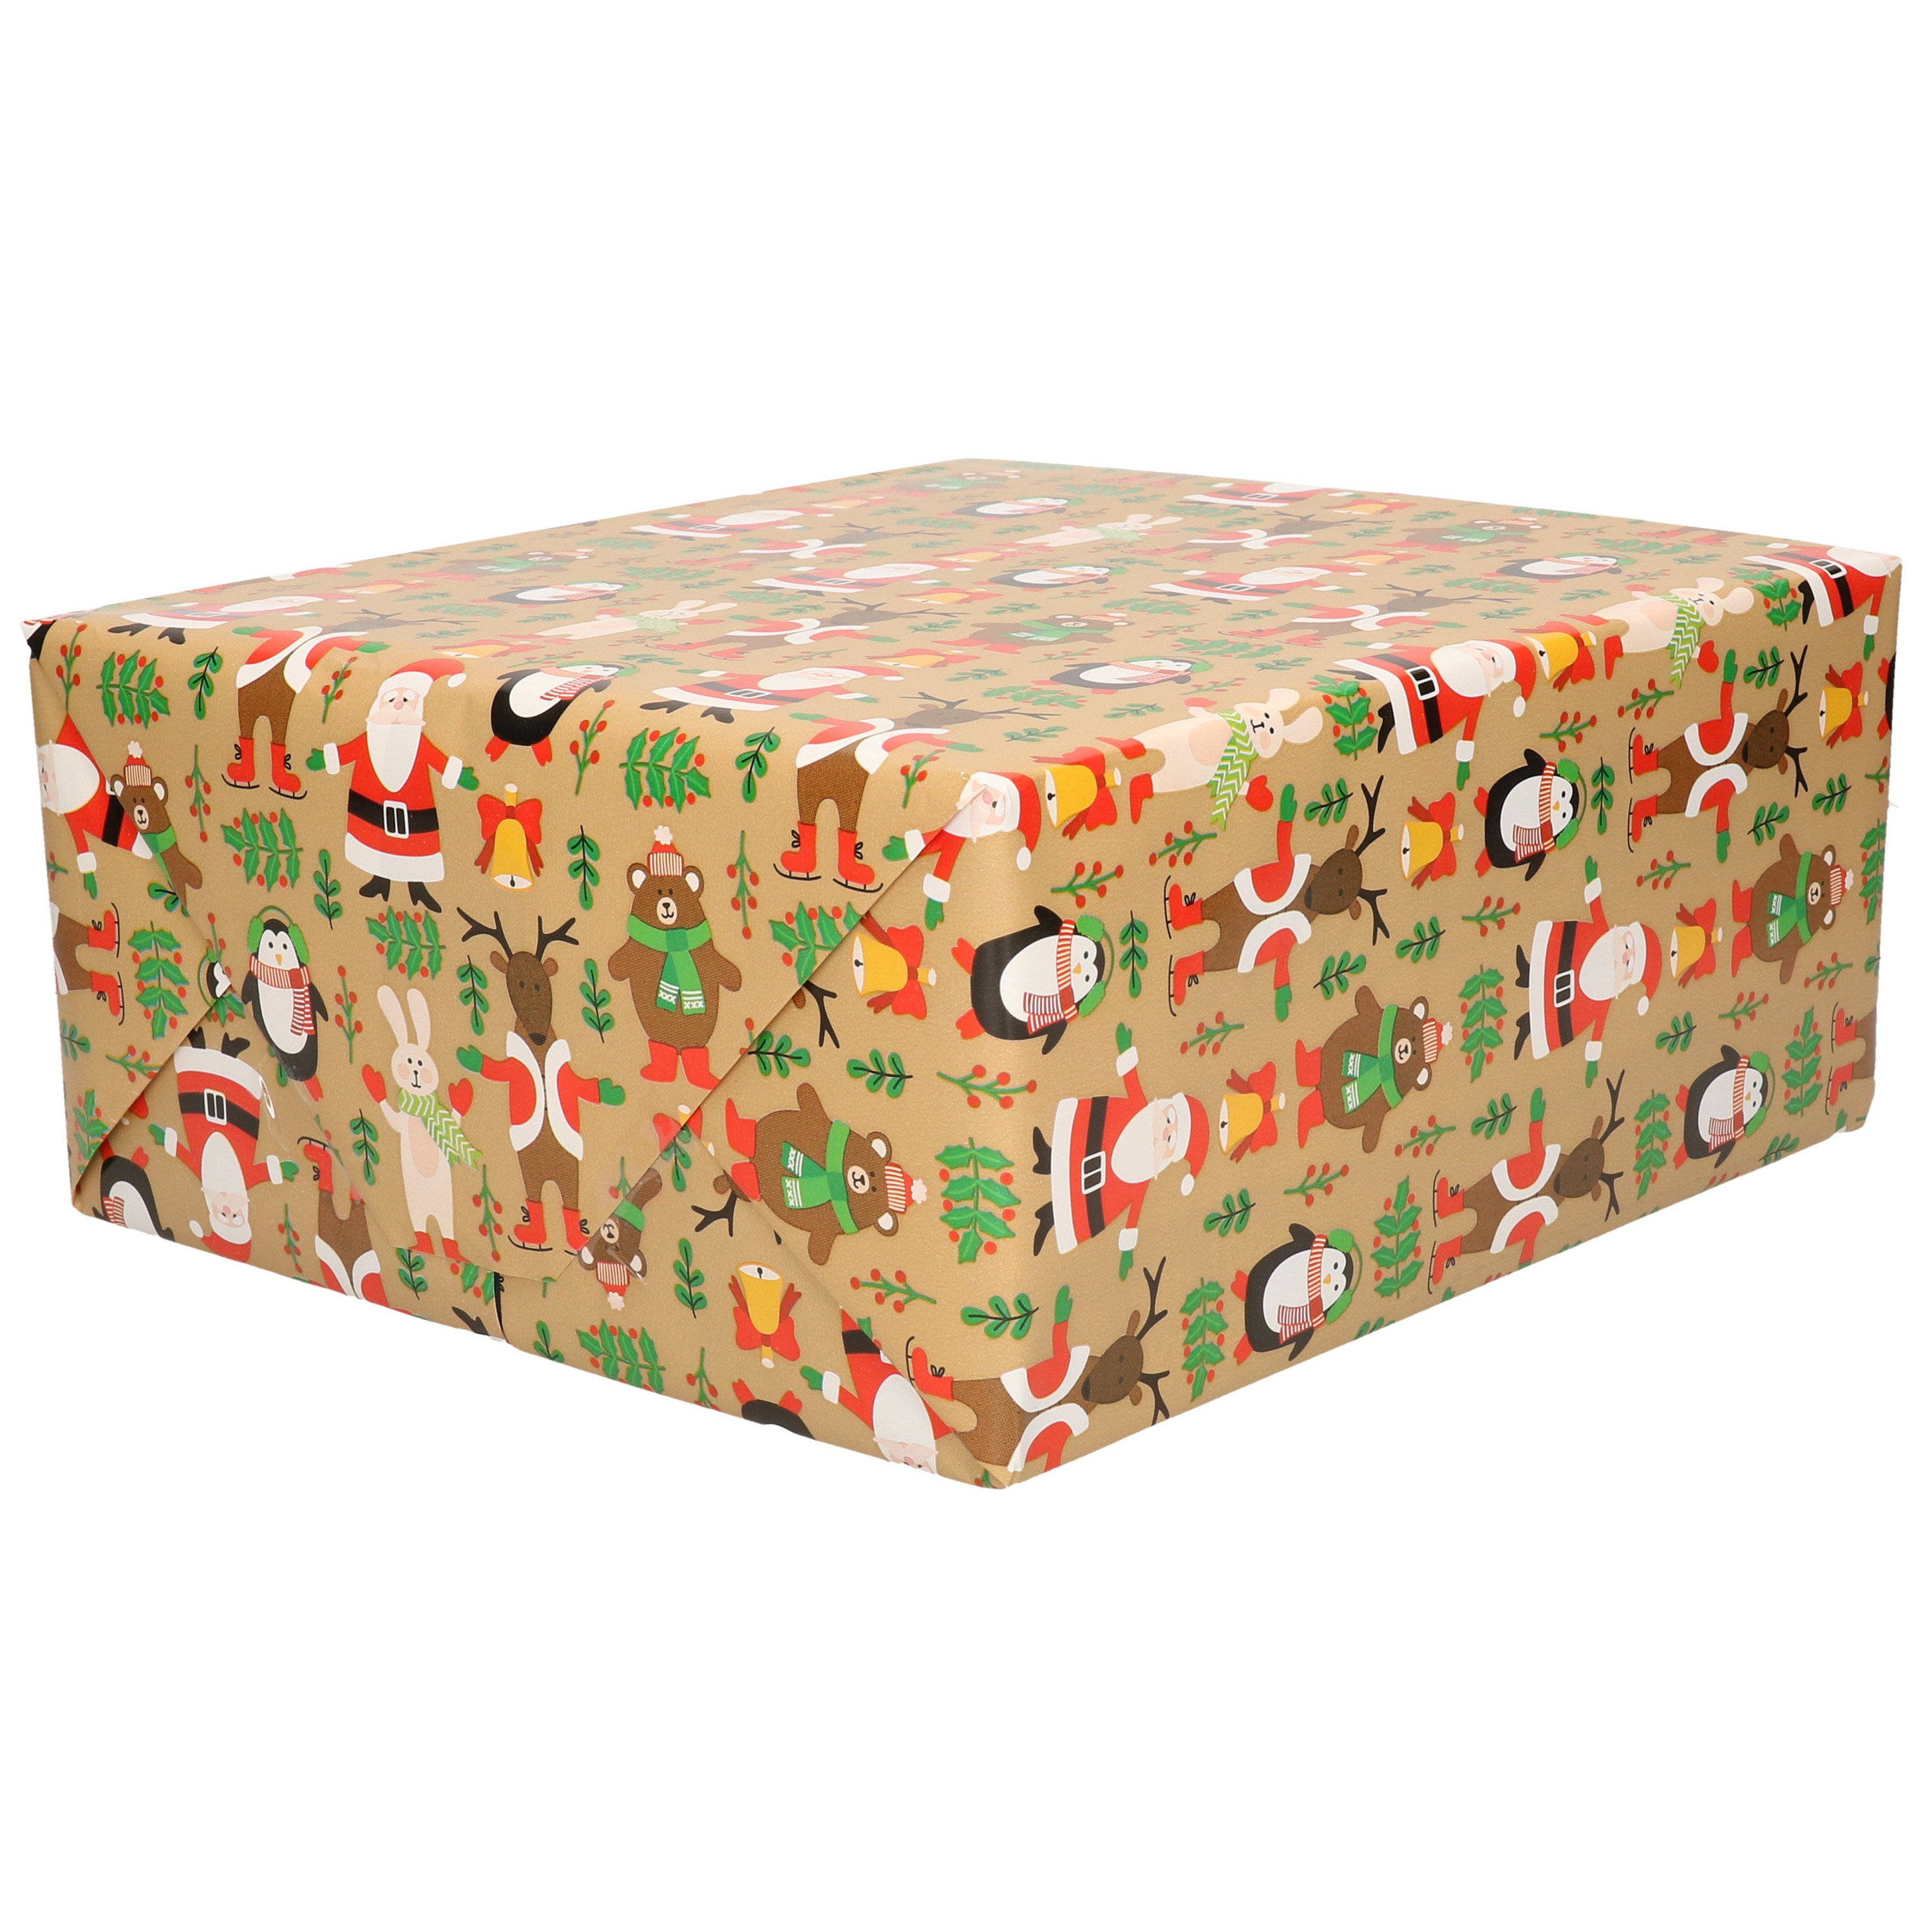 4x Rollen Kerst inpakpapier/cadeaupapier bruin 2,5 x 0,7 meter